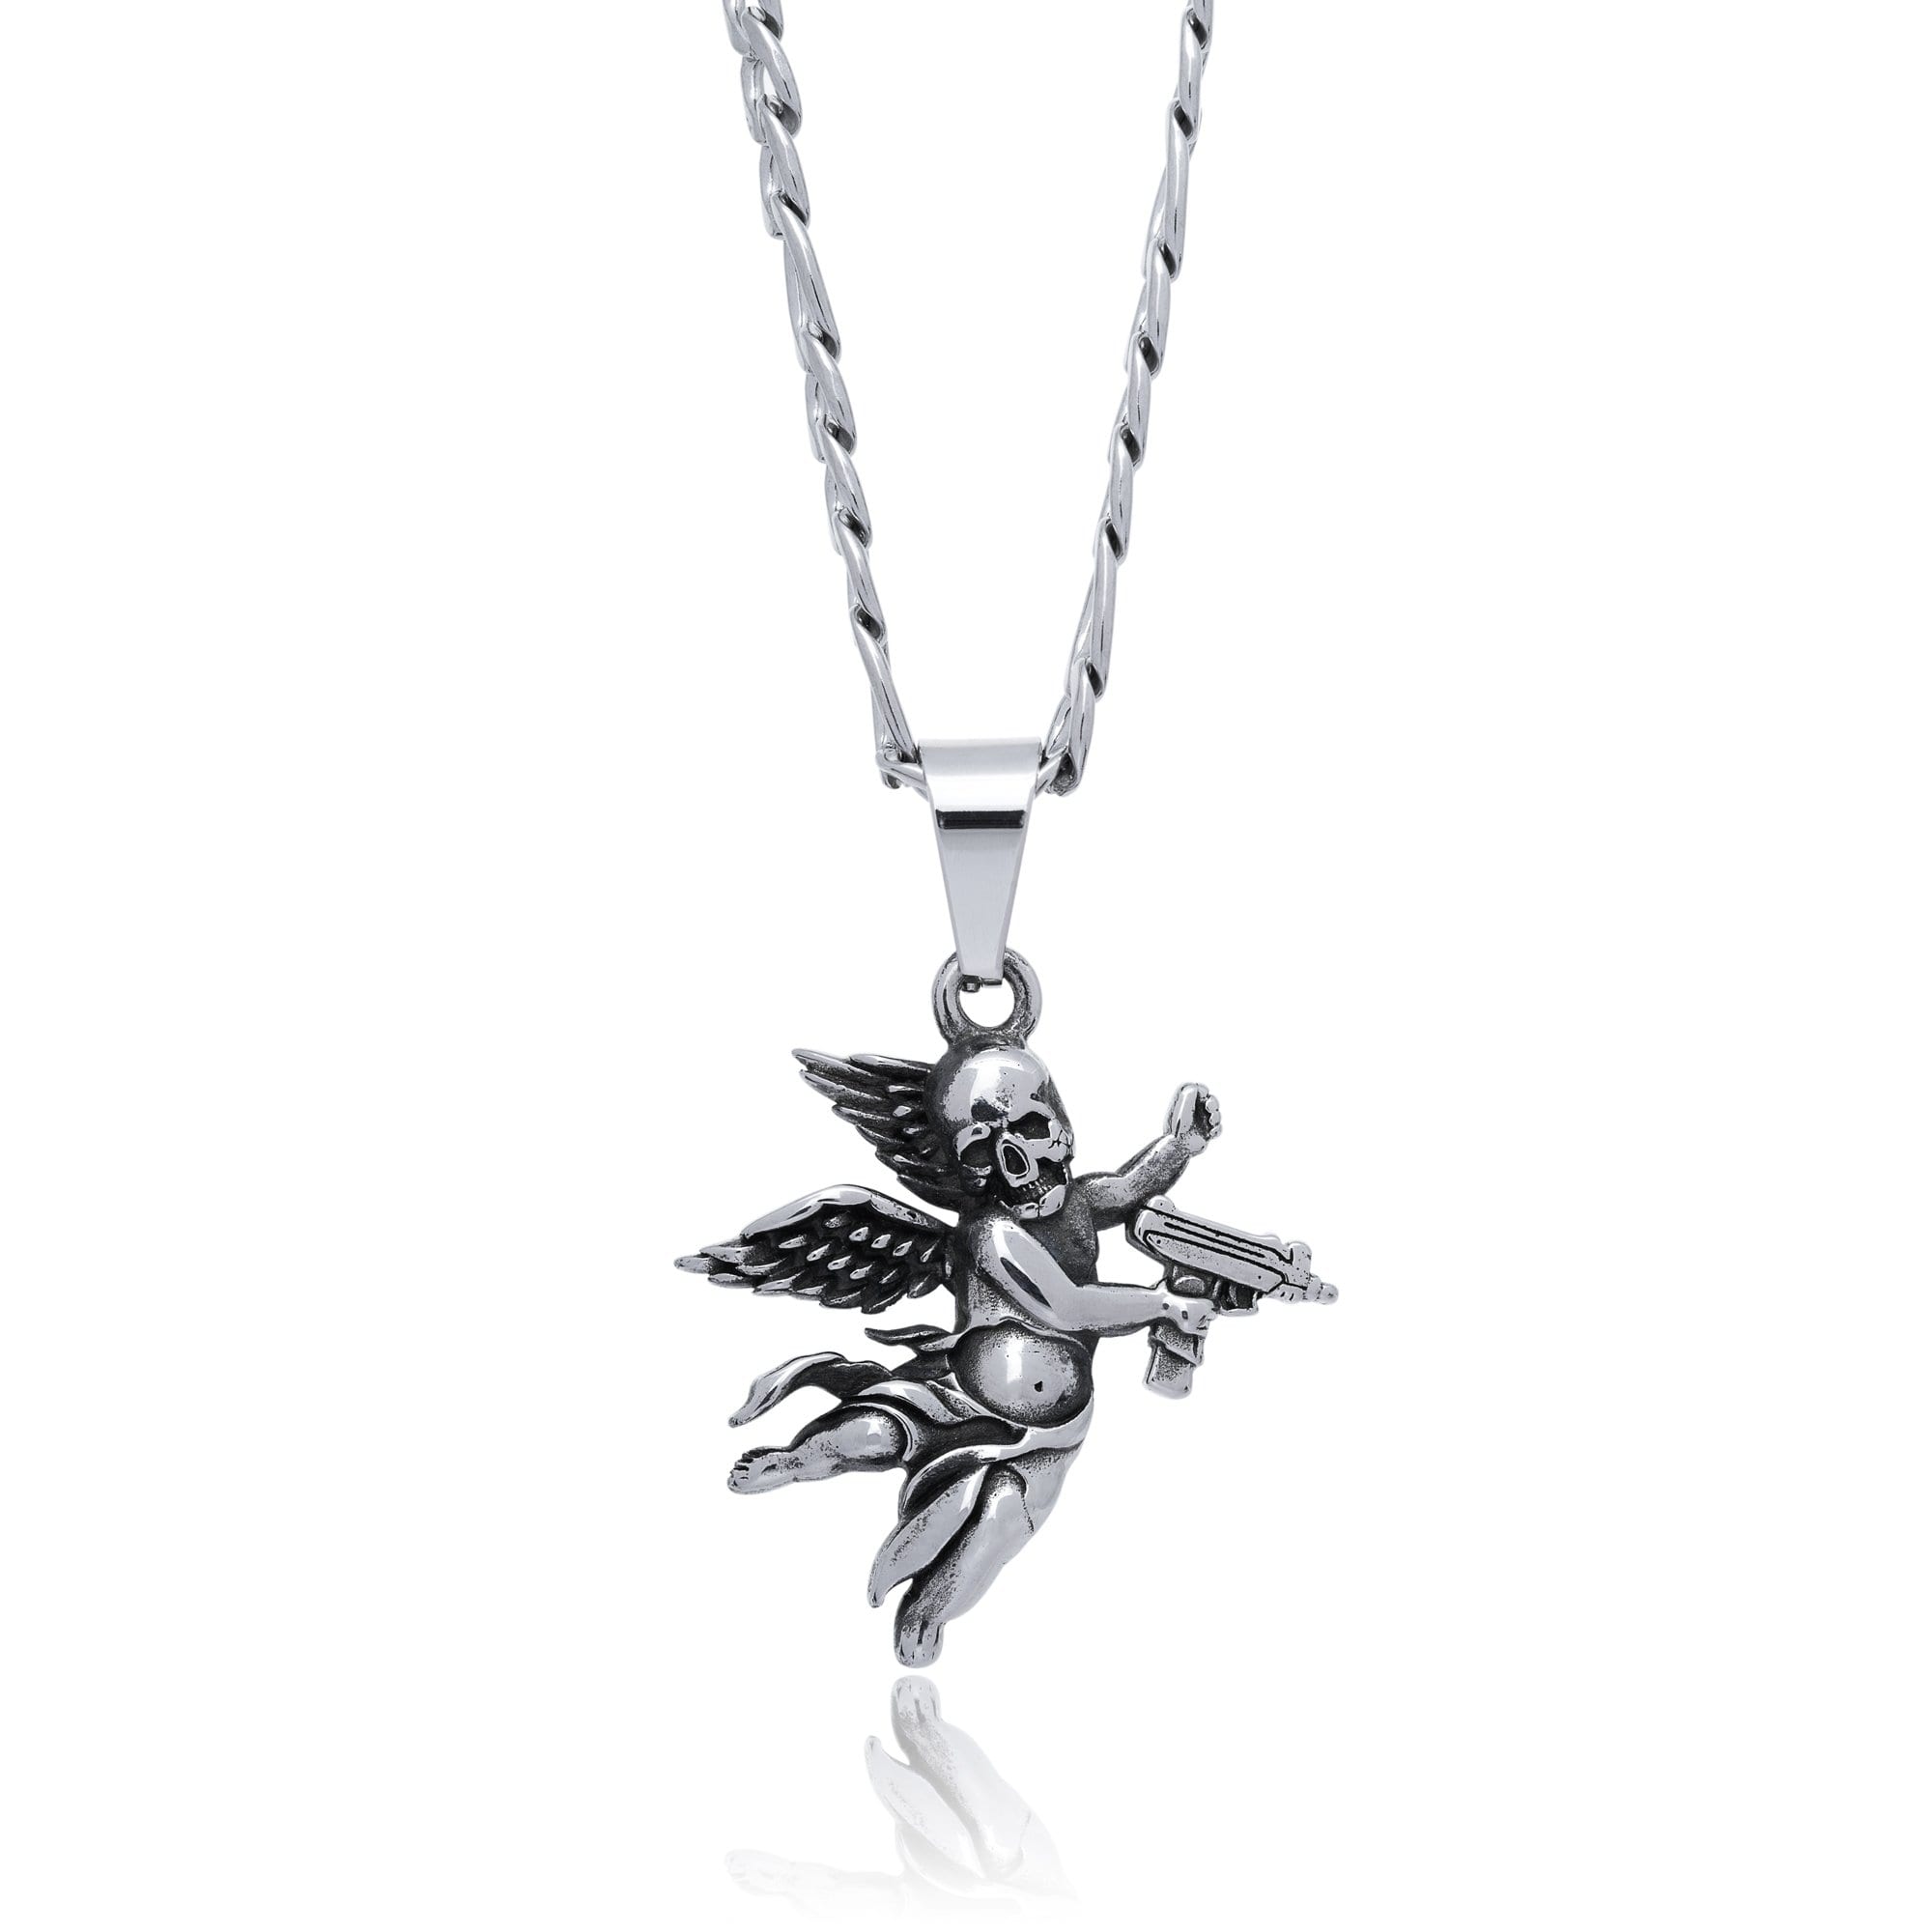 Death's Cupid Cherub Pendant Necklace Chain By Statement_02